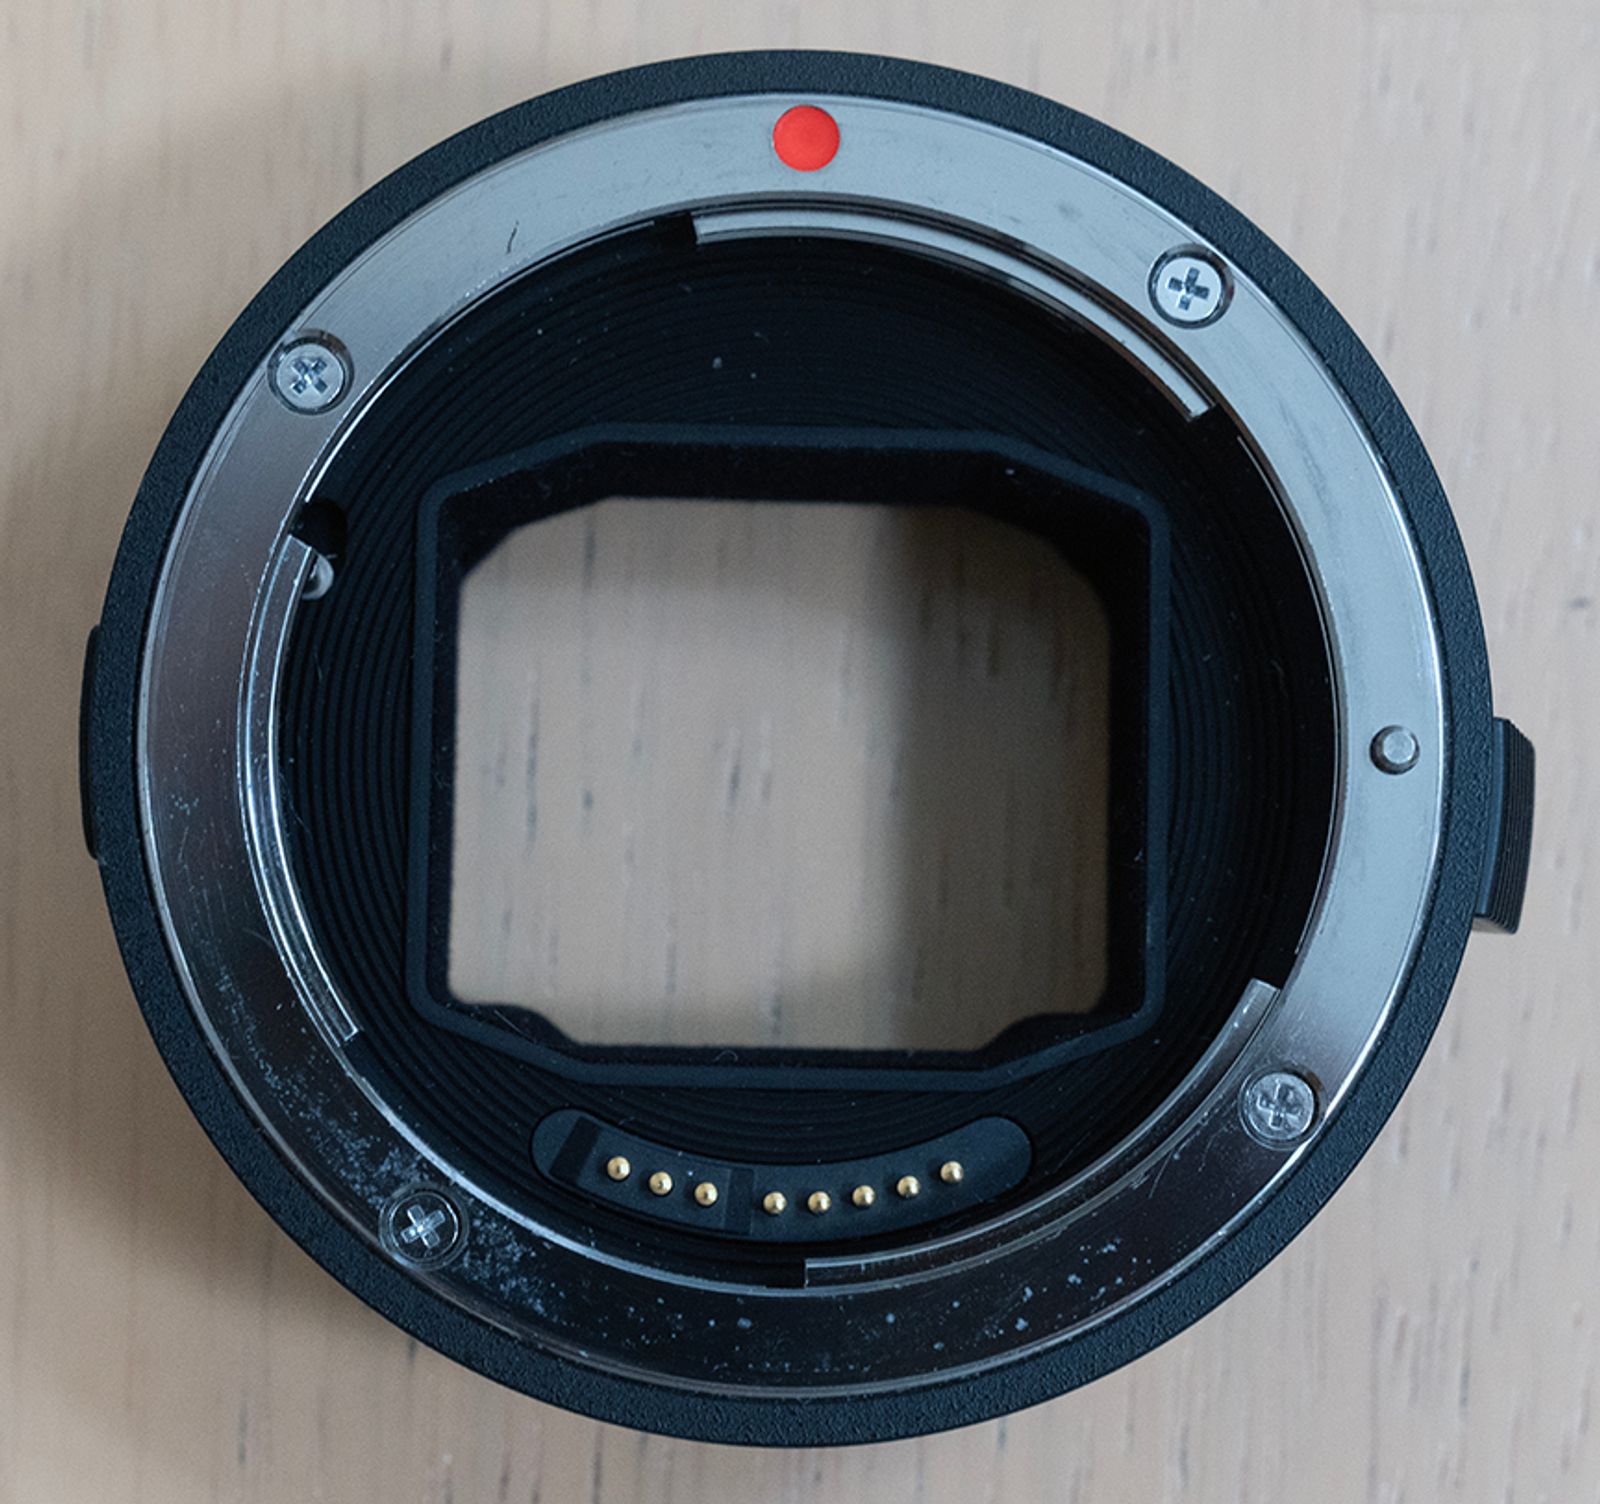 Sigma MC-11 Converter: Canon EF mount - Sony E mount. From 